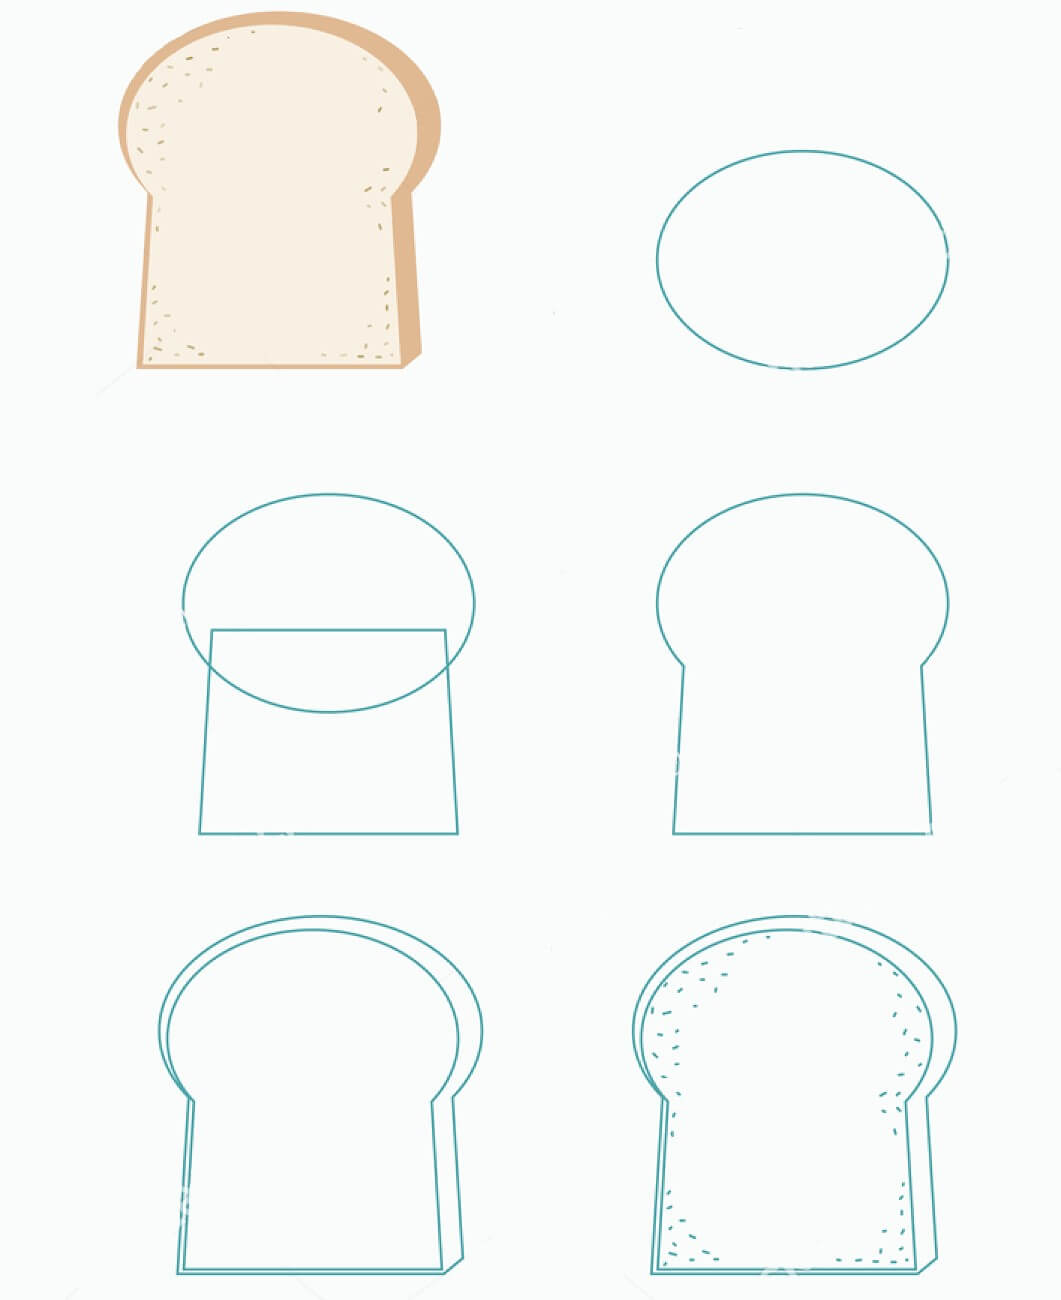 Bread idea (6) Drawing Ideas